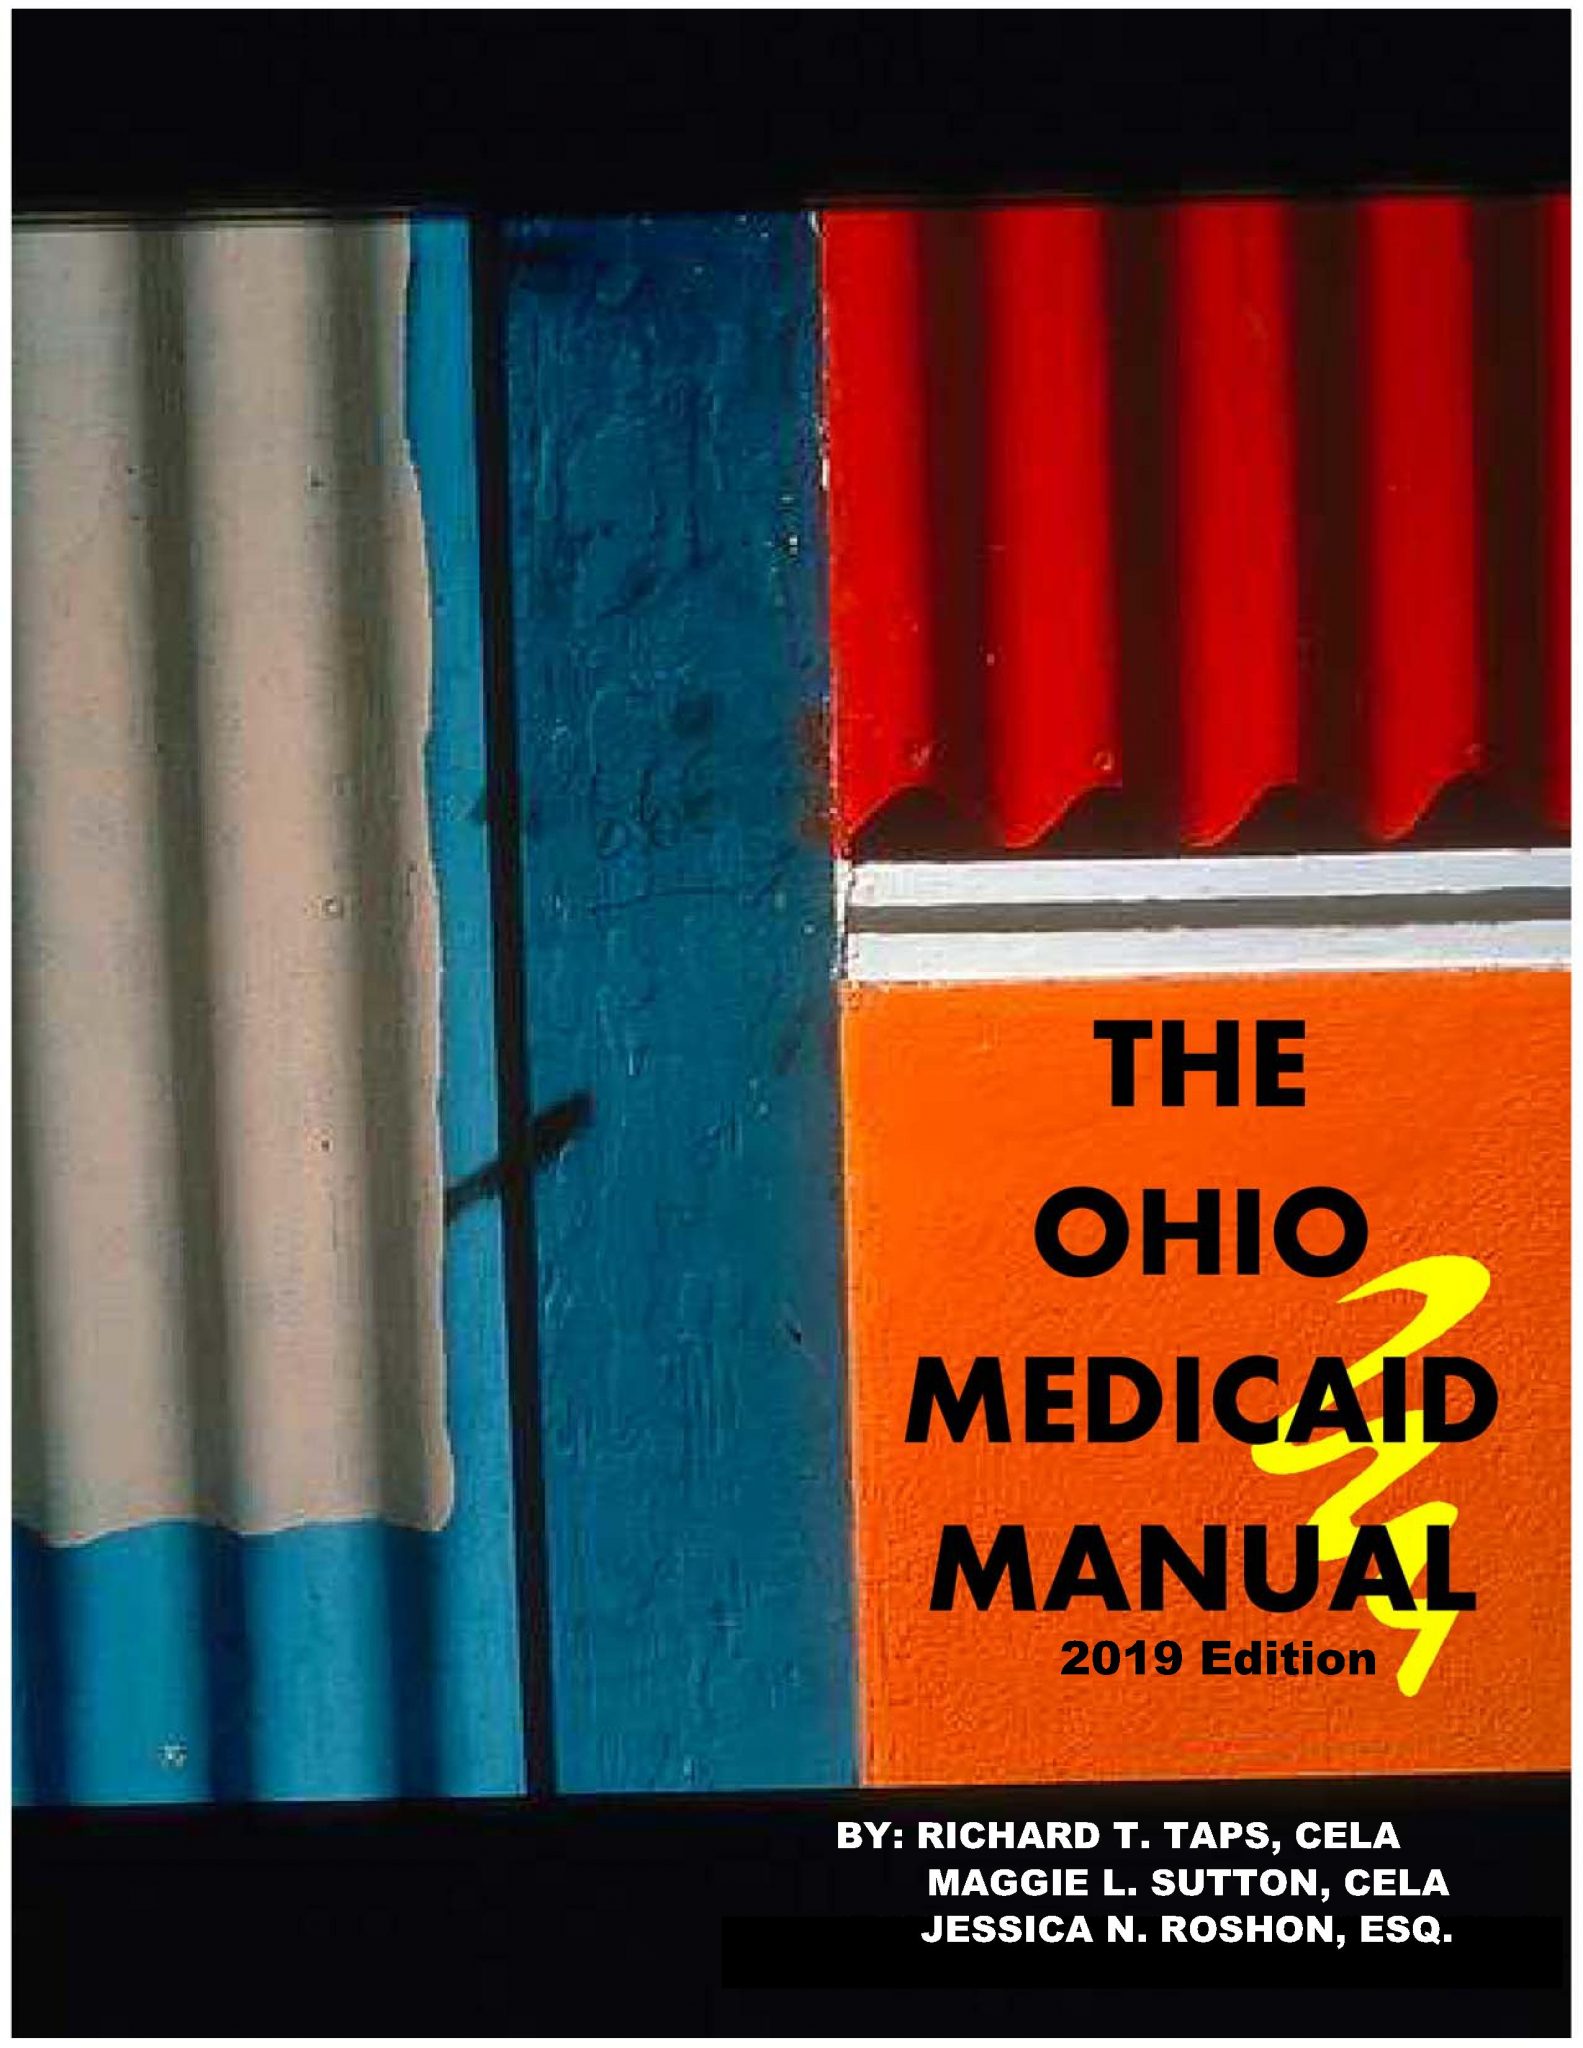 Ohio Medicaid Manual Taps Sutton & Roshon, LLC